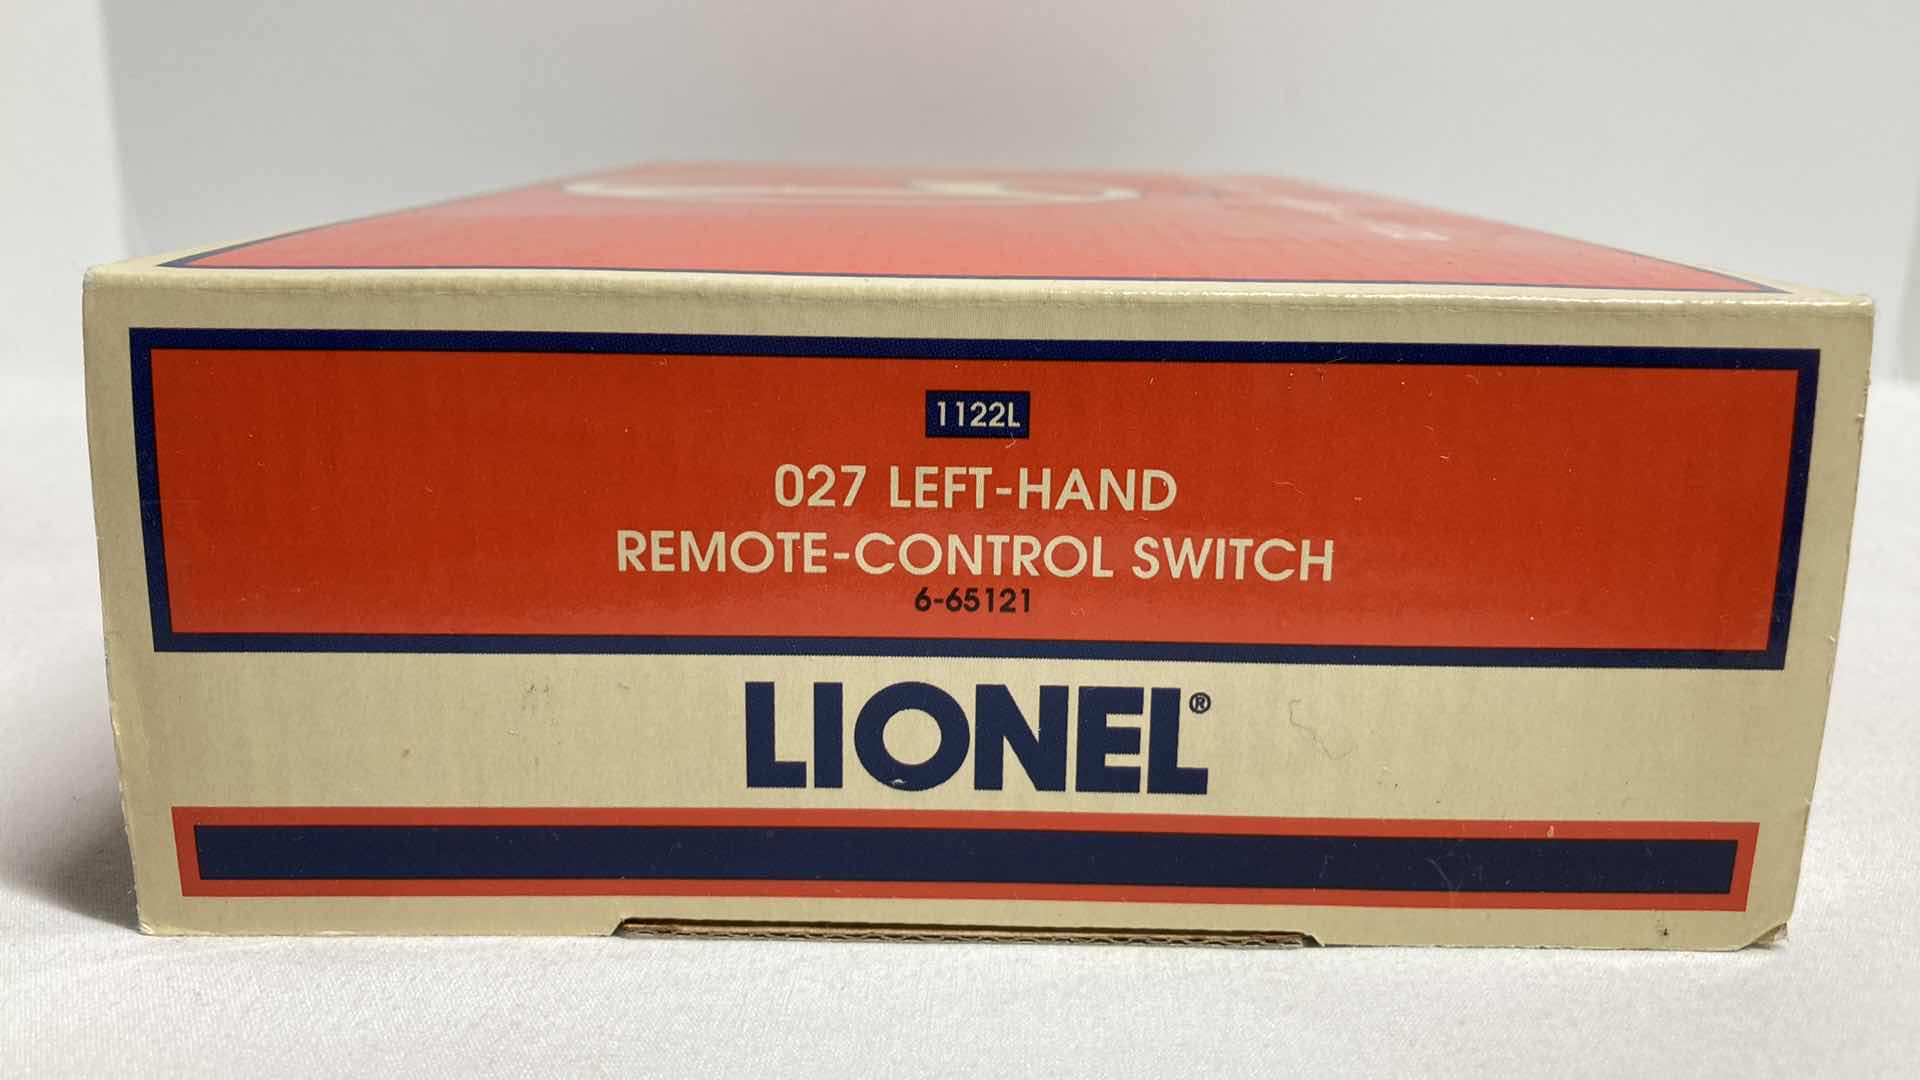 Photo 3 of LIONEL O27 LEFT HAND REMOTE CONTROL SWITCH 6-65121 1122L